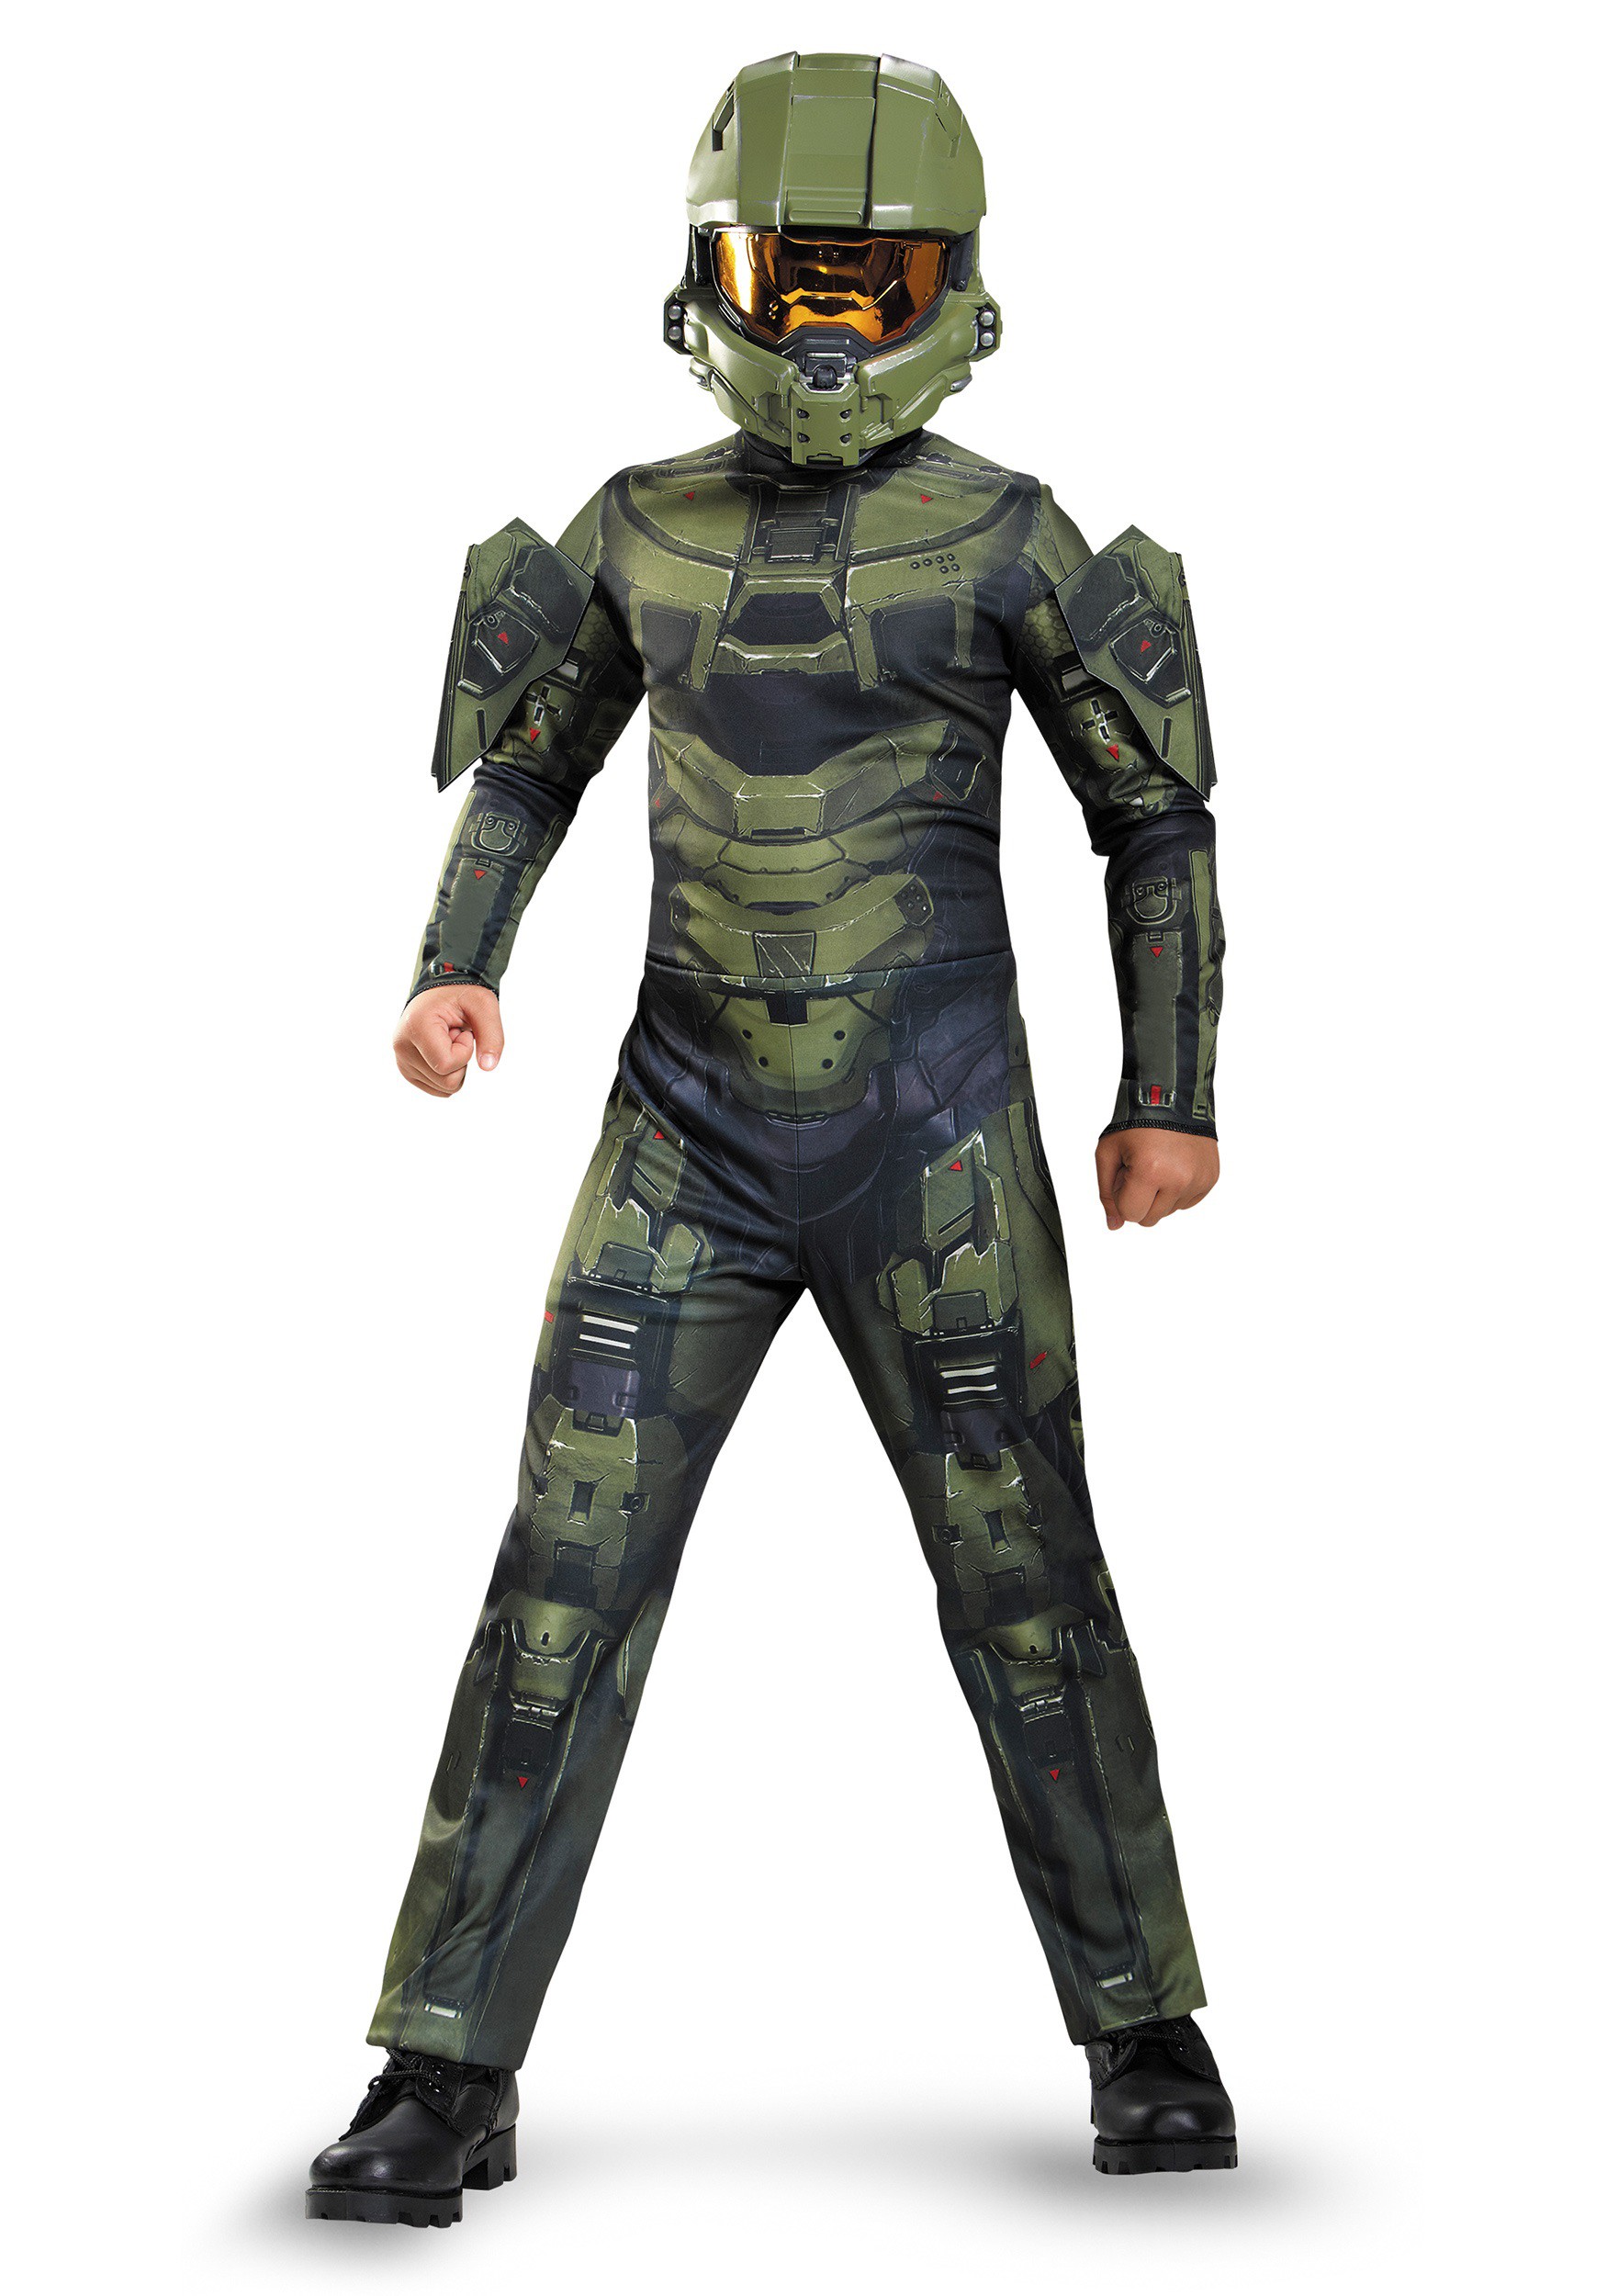 Boys Halo Master Chief Classic Costume